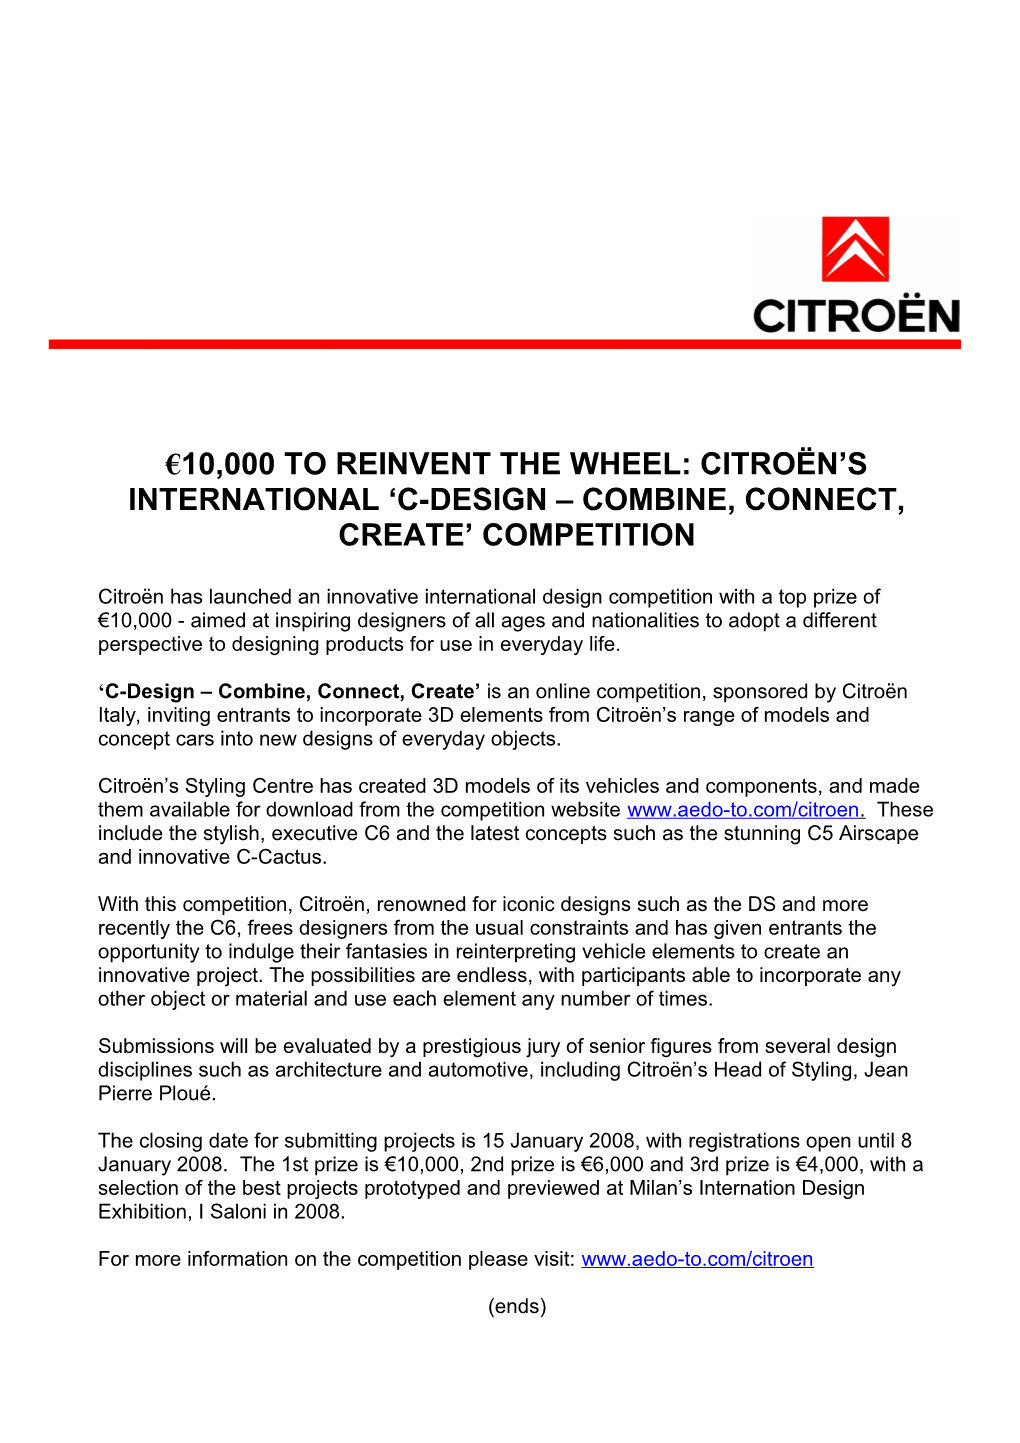 10,000 to Reinvent the Wheel: Citroën S International C-Design Combine, Connect, Create